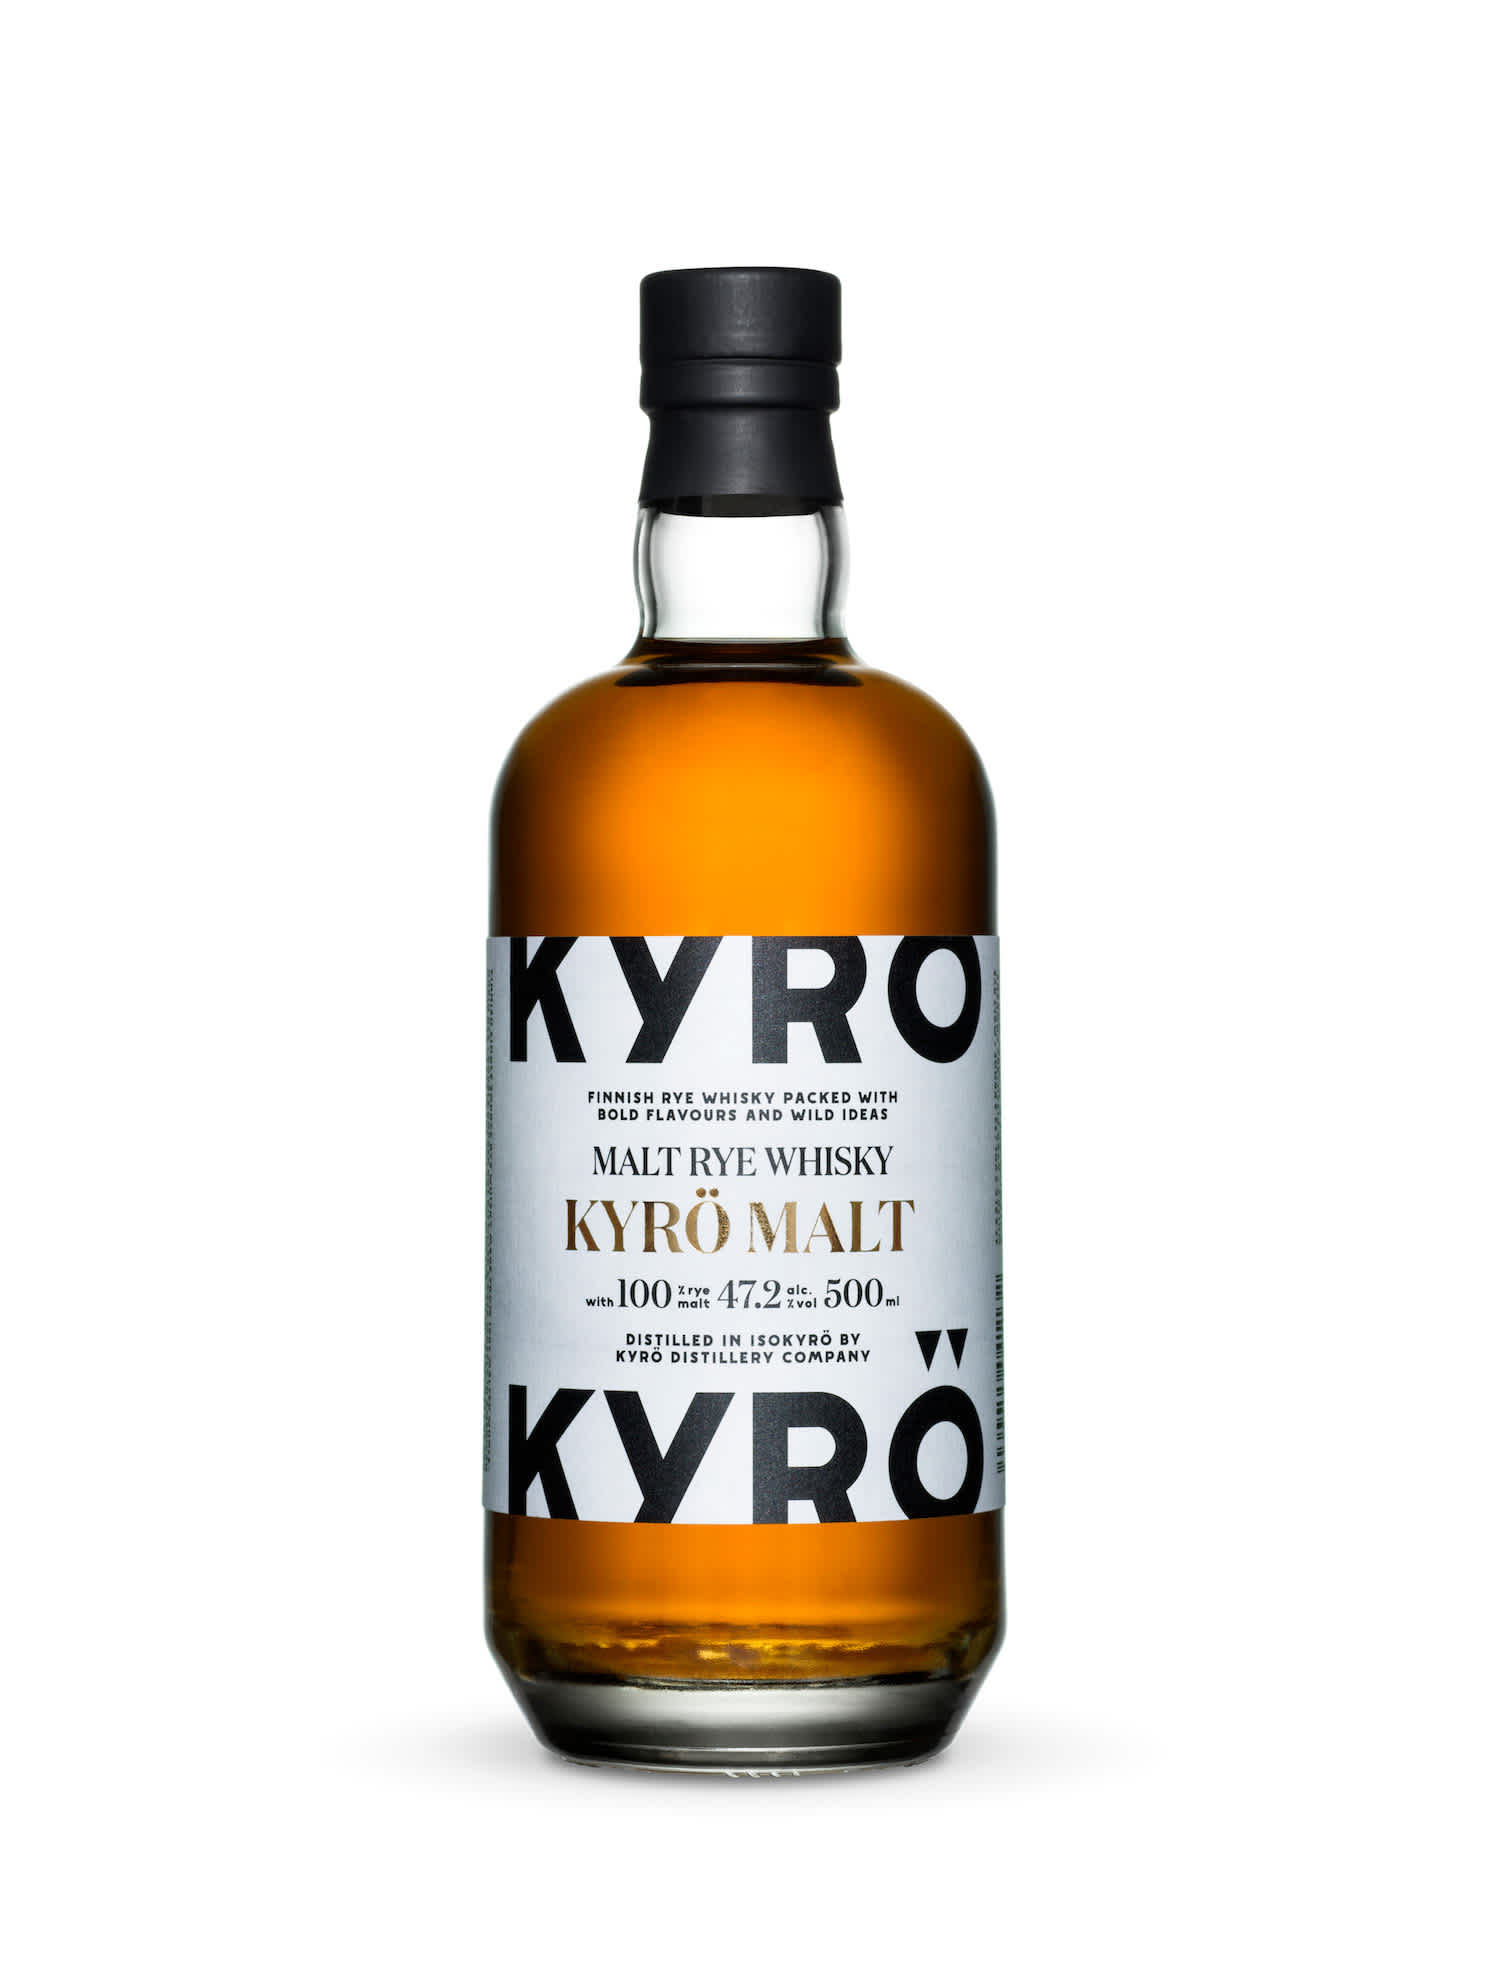 Product photo: 0,5 l bottle of award-winning, Finnish rye whisky from Kyrö Distillery Company.